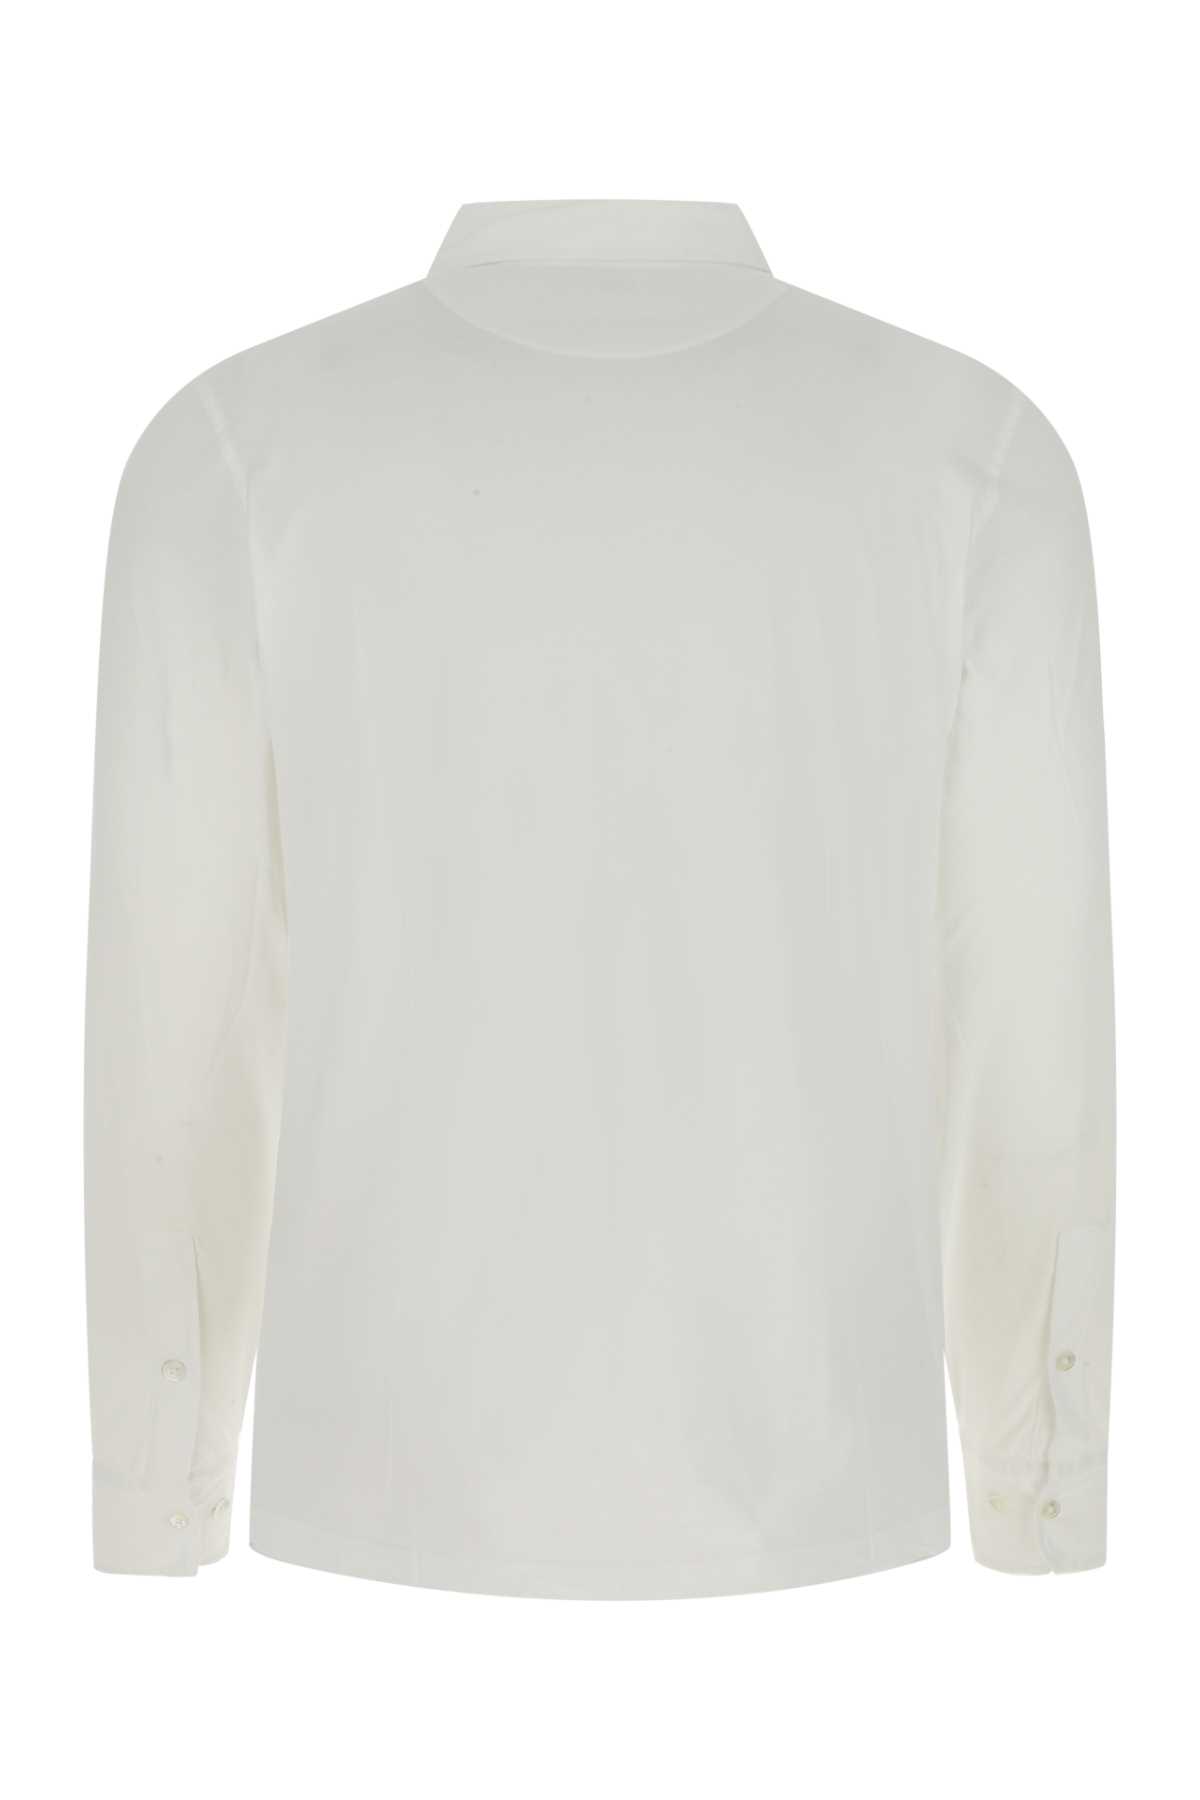 Hartford White Cotton Shirt In 01